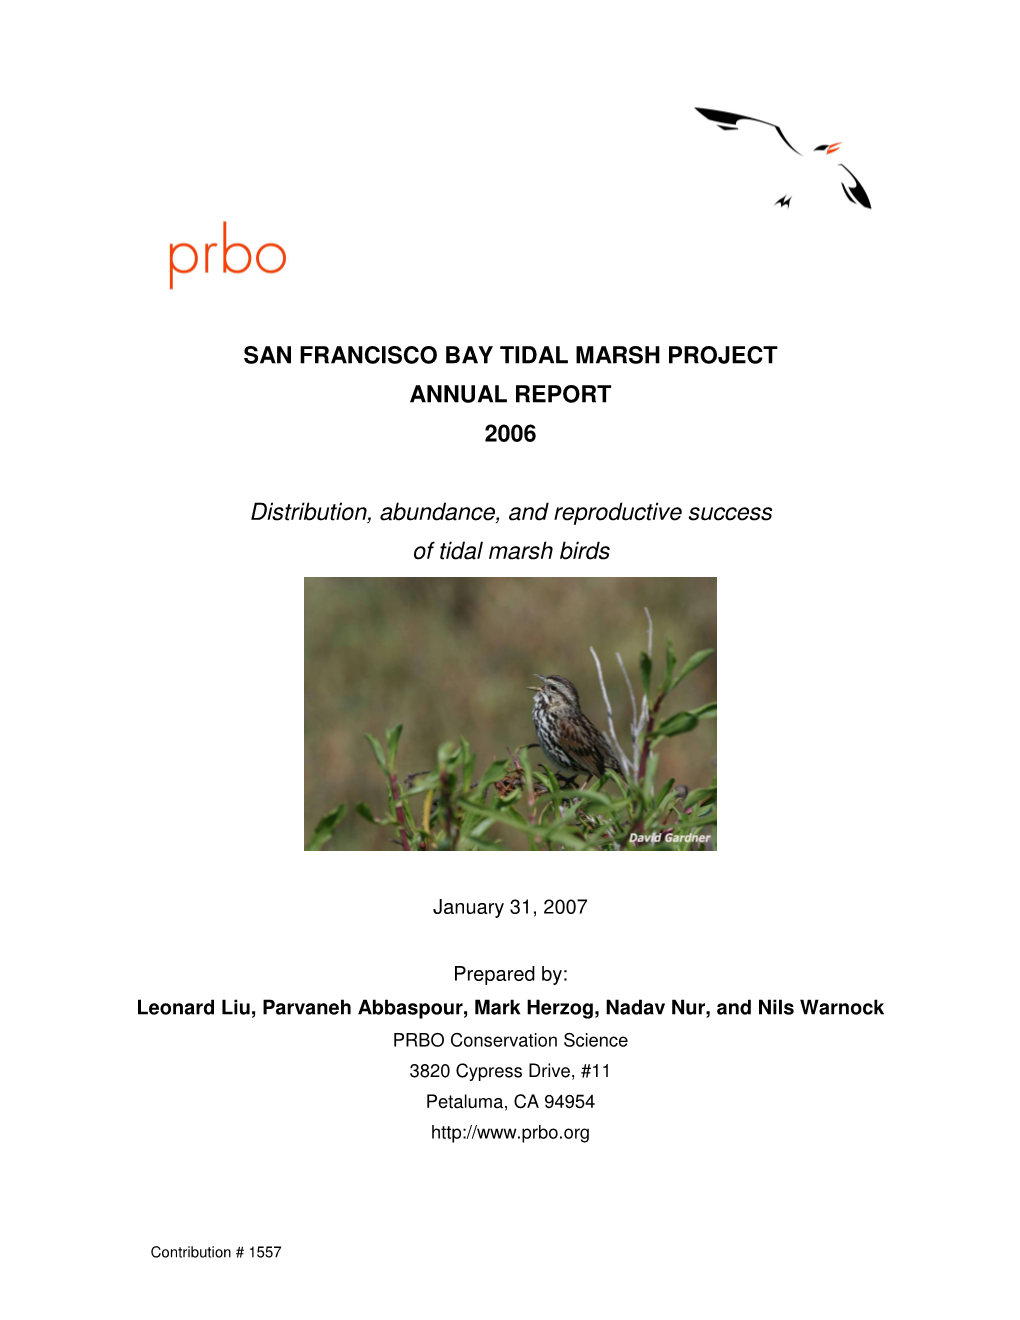 San Francisco Bay Tidal Marsh Project Annual Report 2006